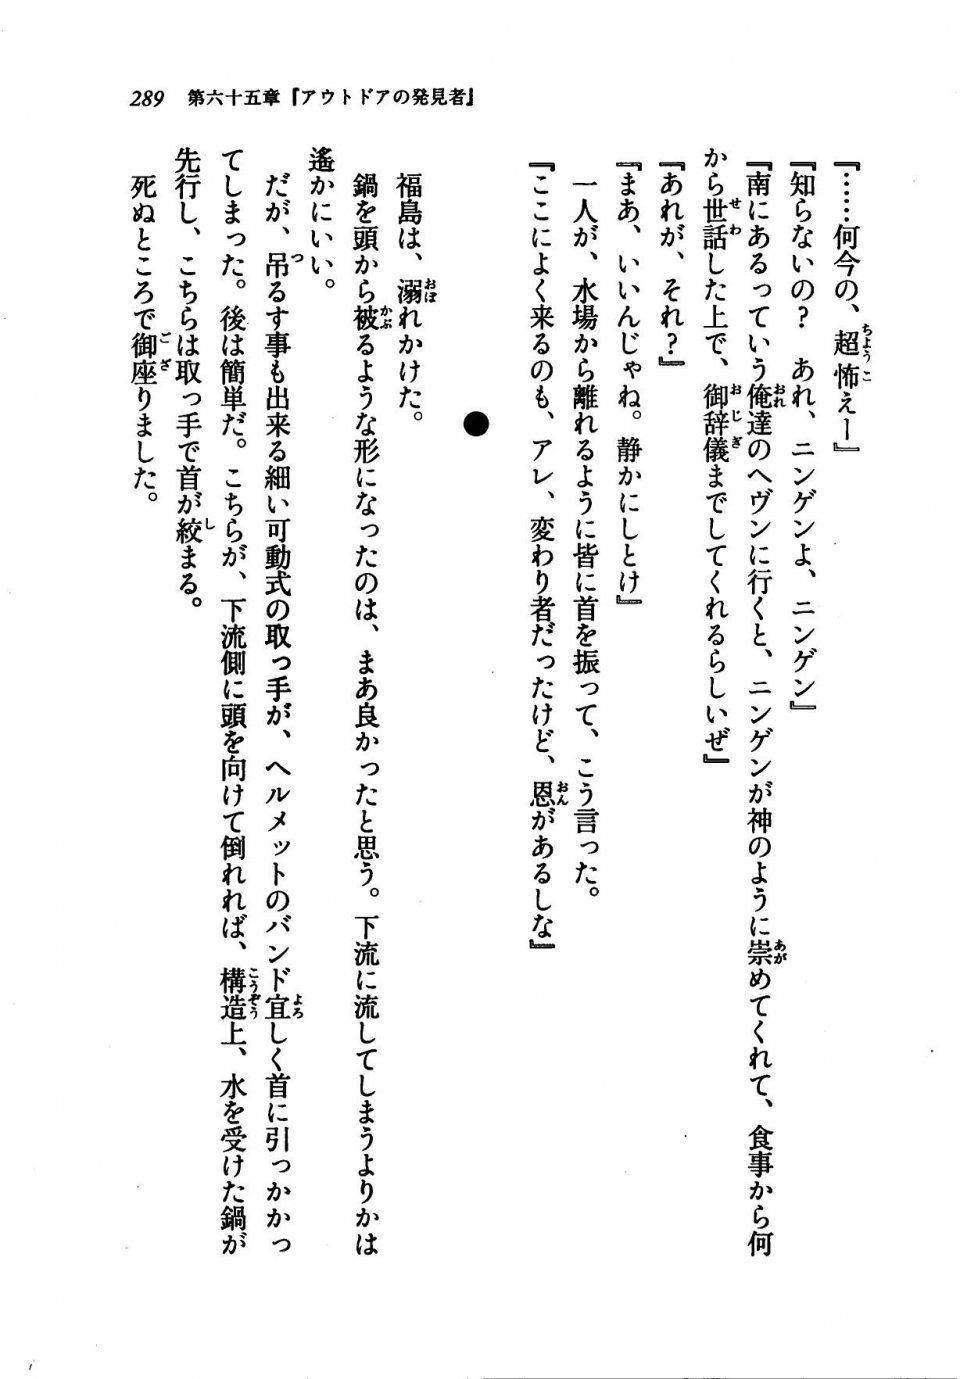 Kyoukai Senjou no Horizon LN Vol 21(8C) Part 1 - Photo #288